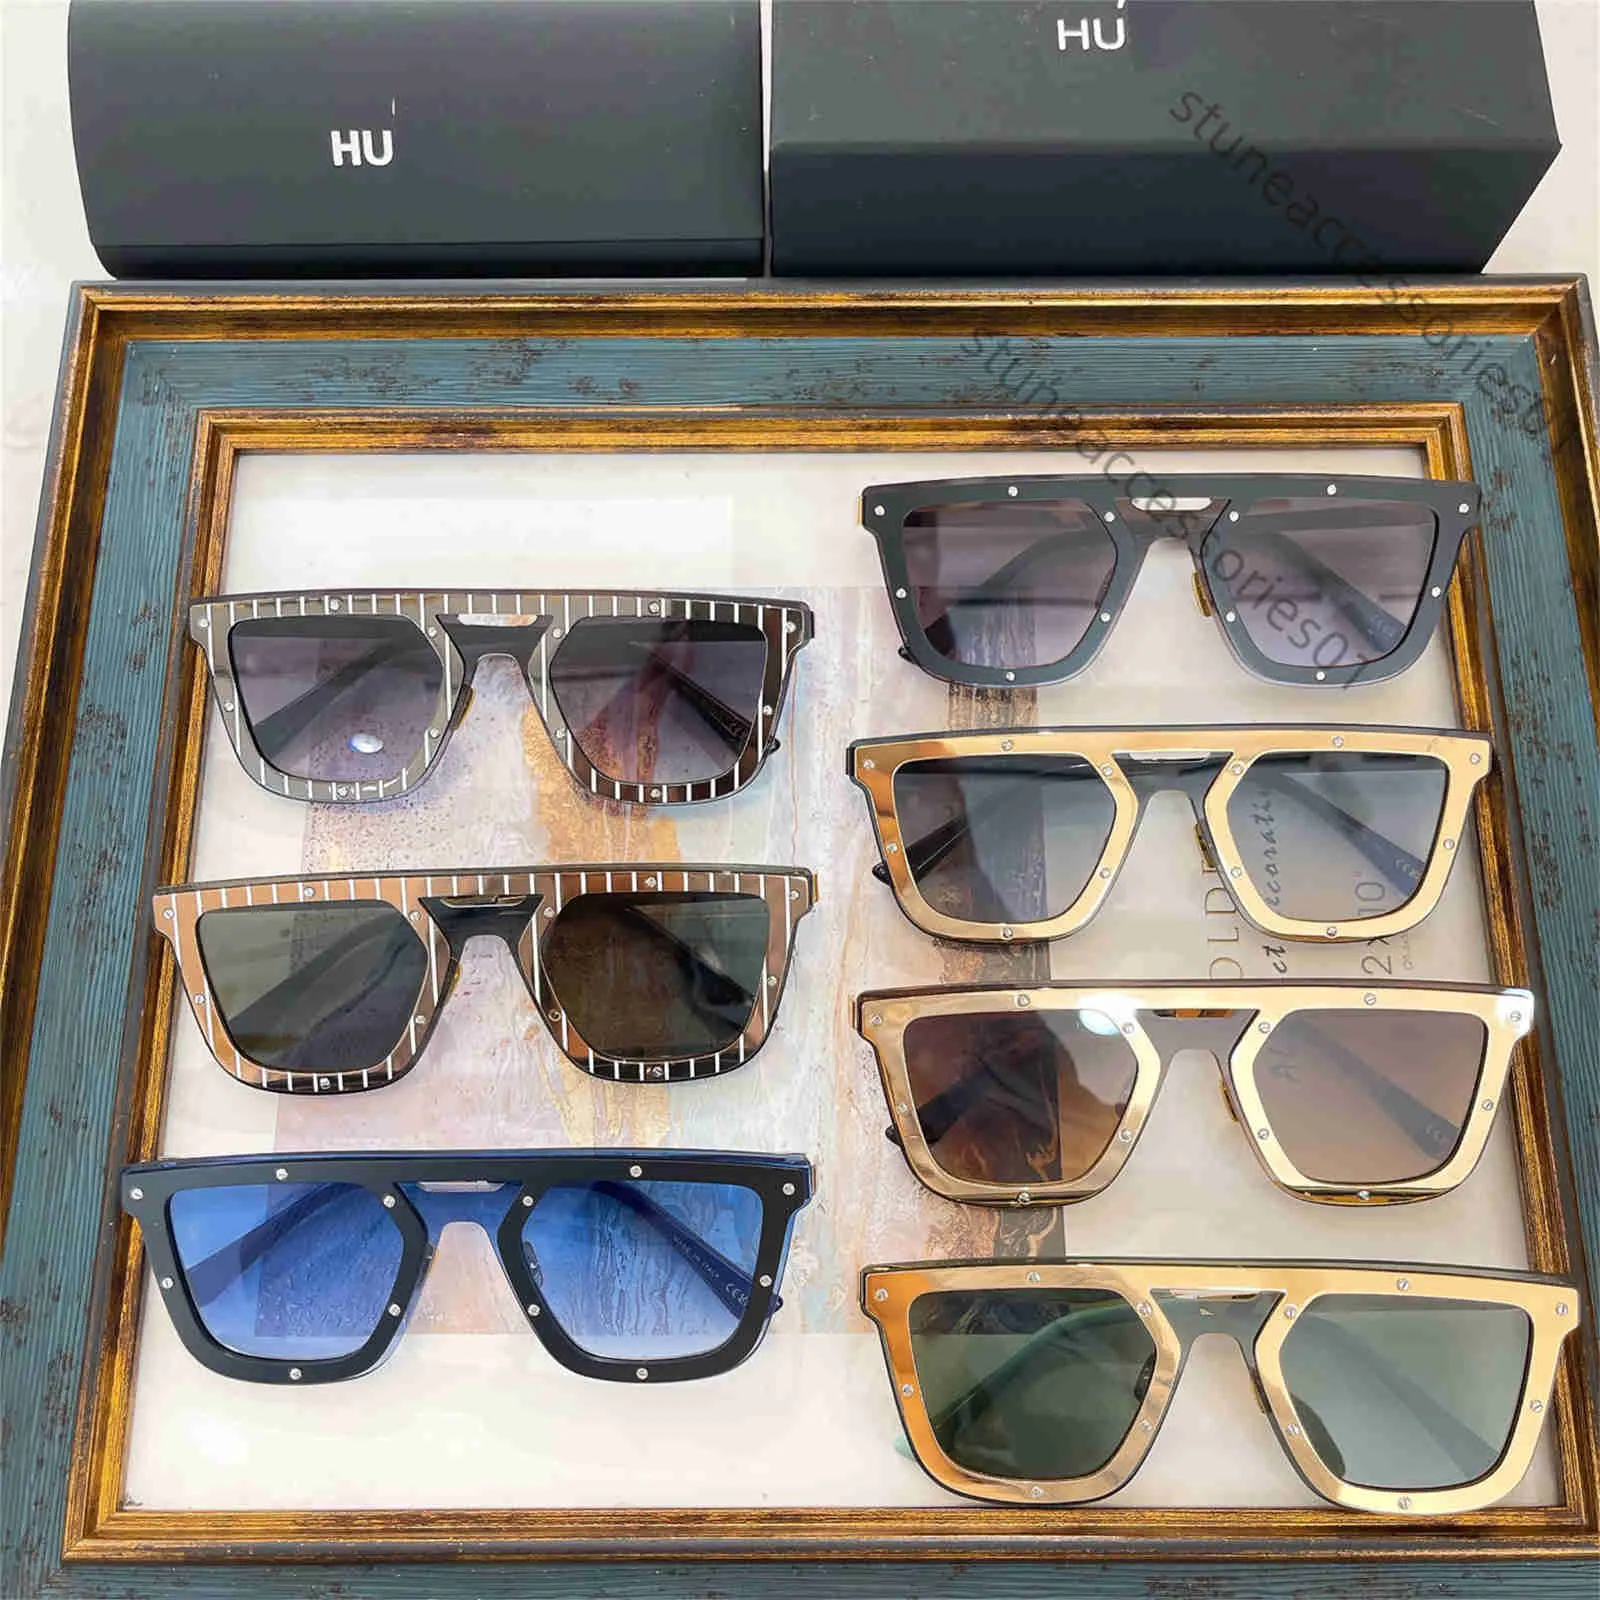 Occhiali da sole HUBLO H5 Occhiali da sole firmati per uomo famosi occhiali da sole classici da donna retrò alla moda di marca di lusso